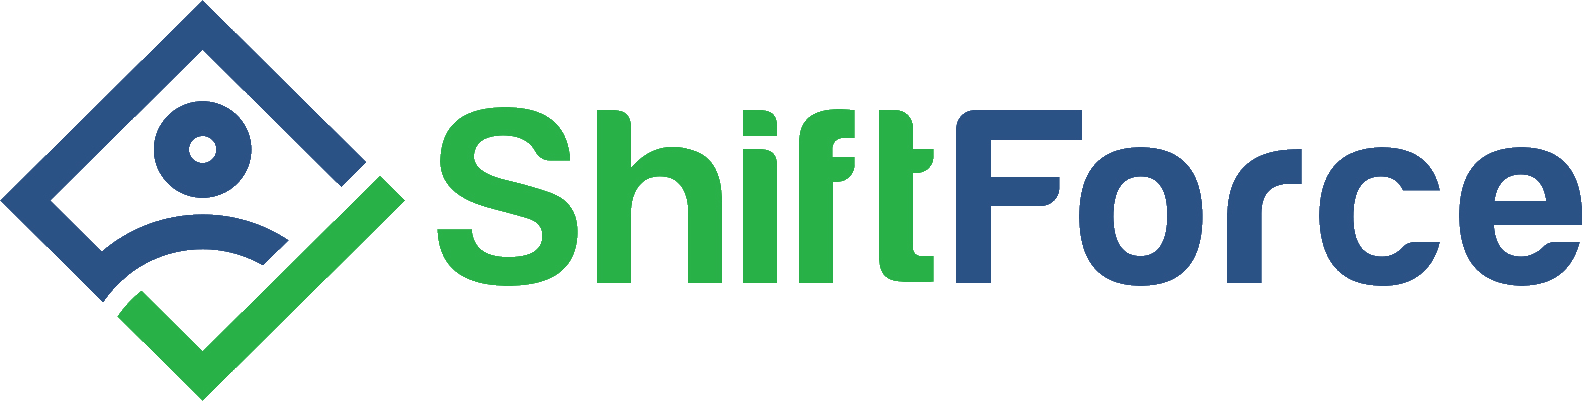 ShiftForce Logo